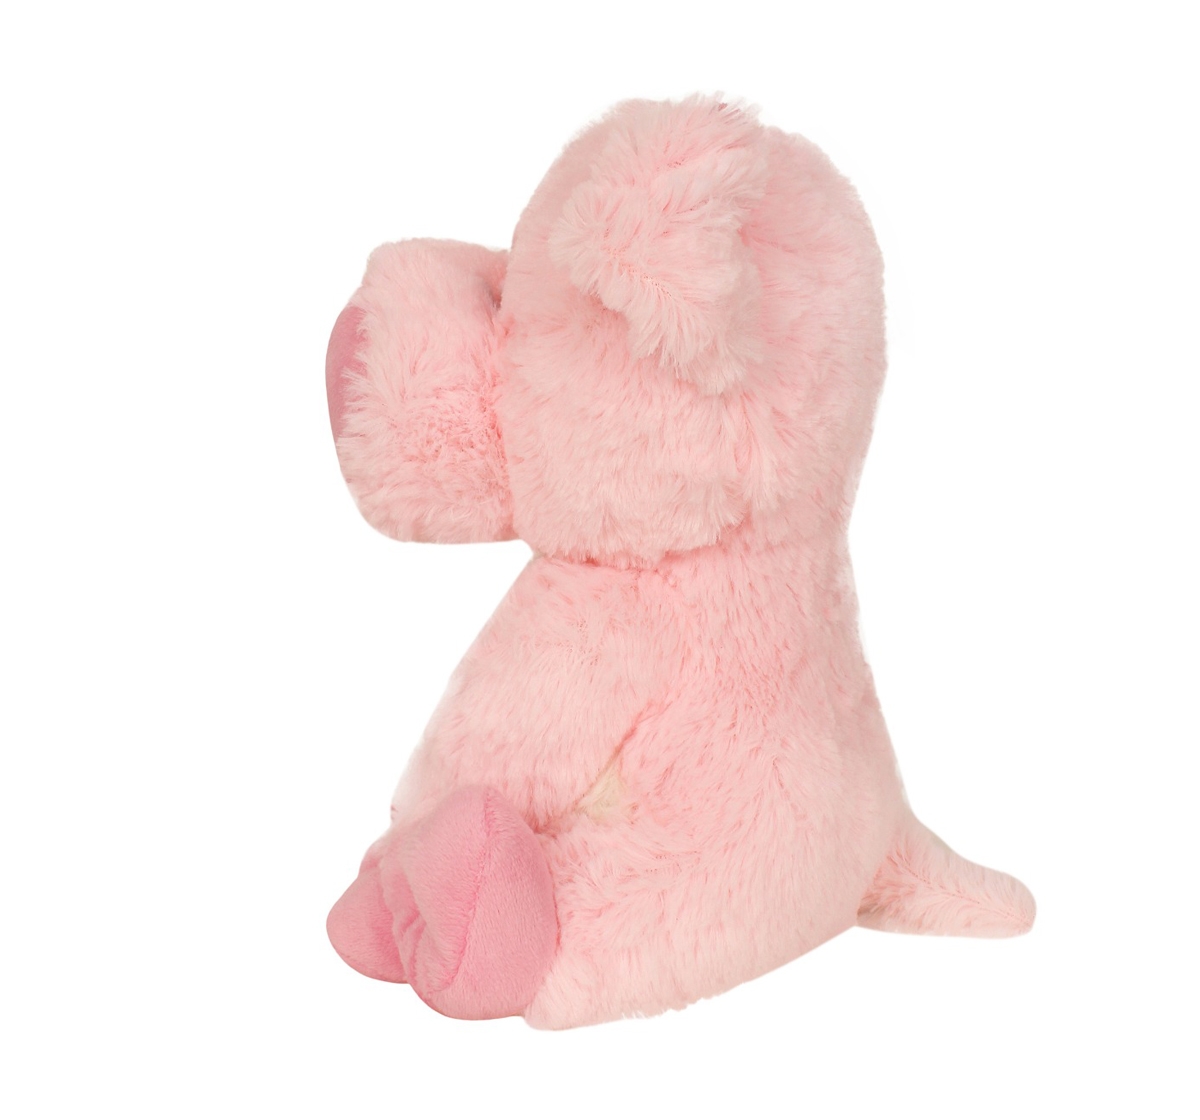 Fuzzbuzz | Fuzzbuzz Sitting Pig - 25Cm Quirky Soft Toys for Kids age 0M+ - 25 Cm (Pink)